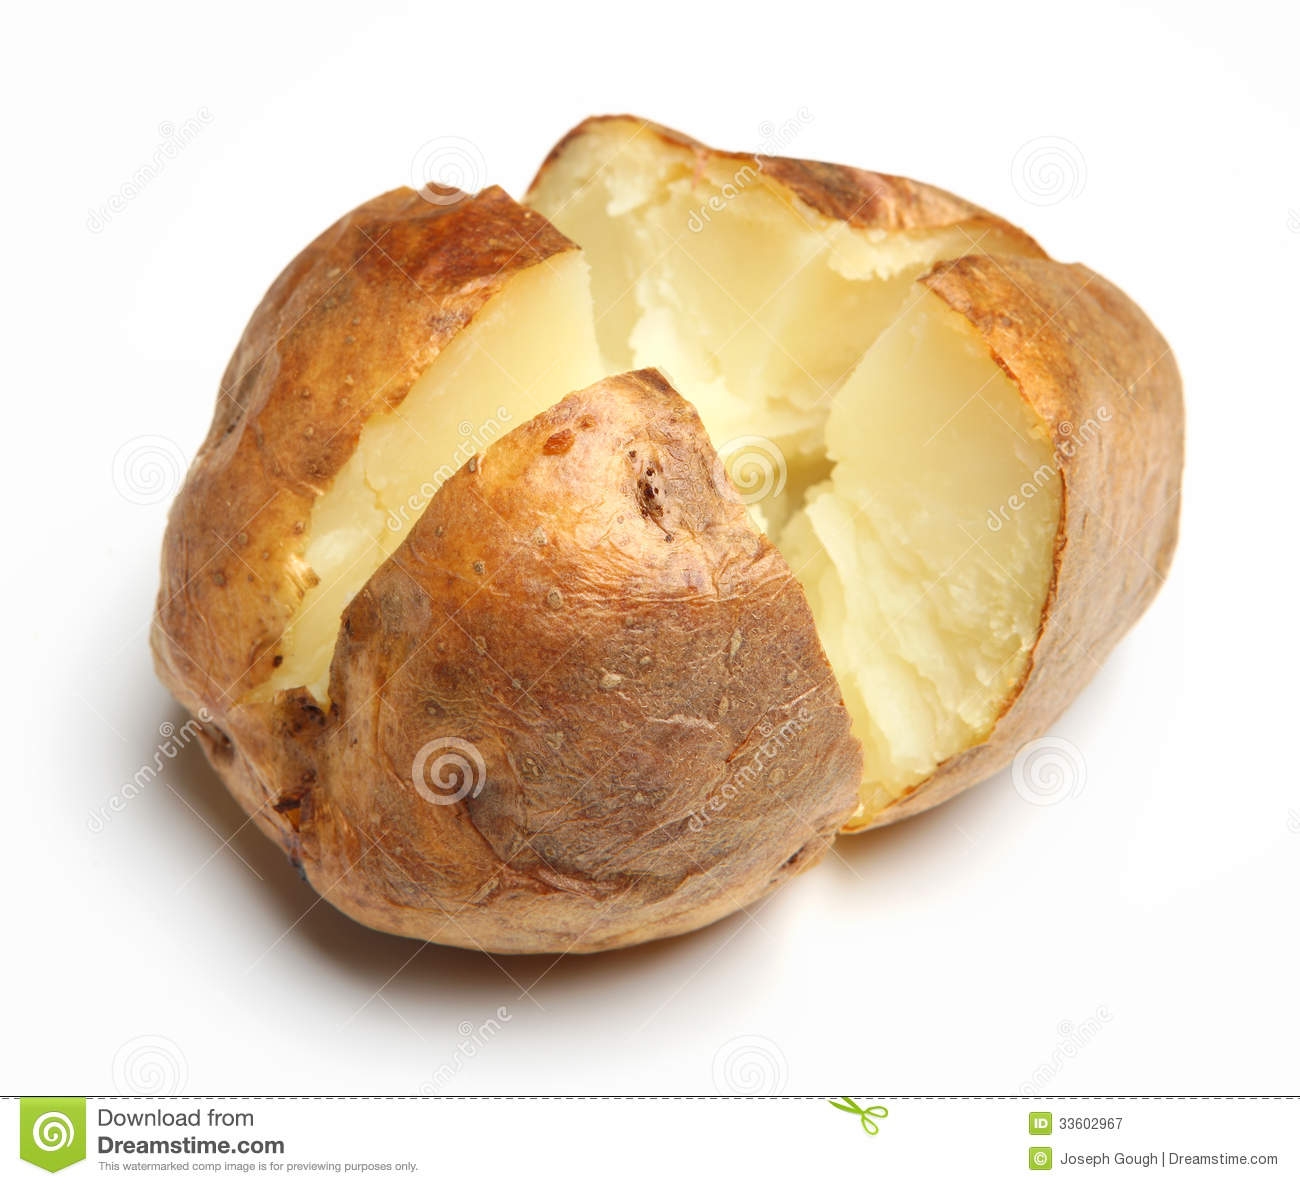 Baked Potato Carbonara